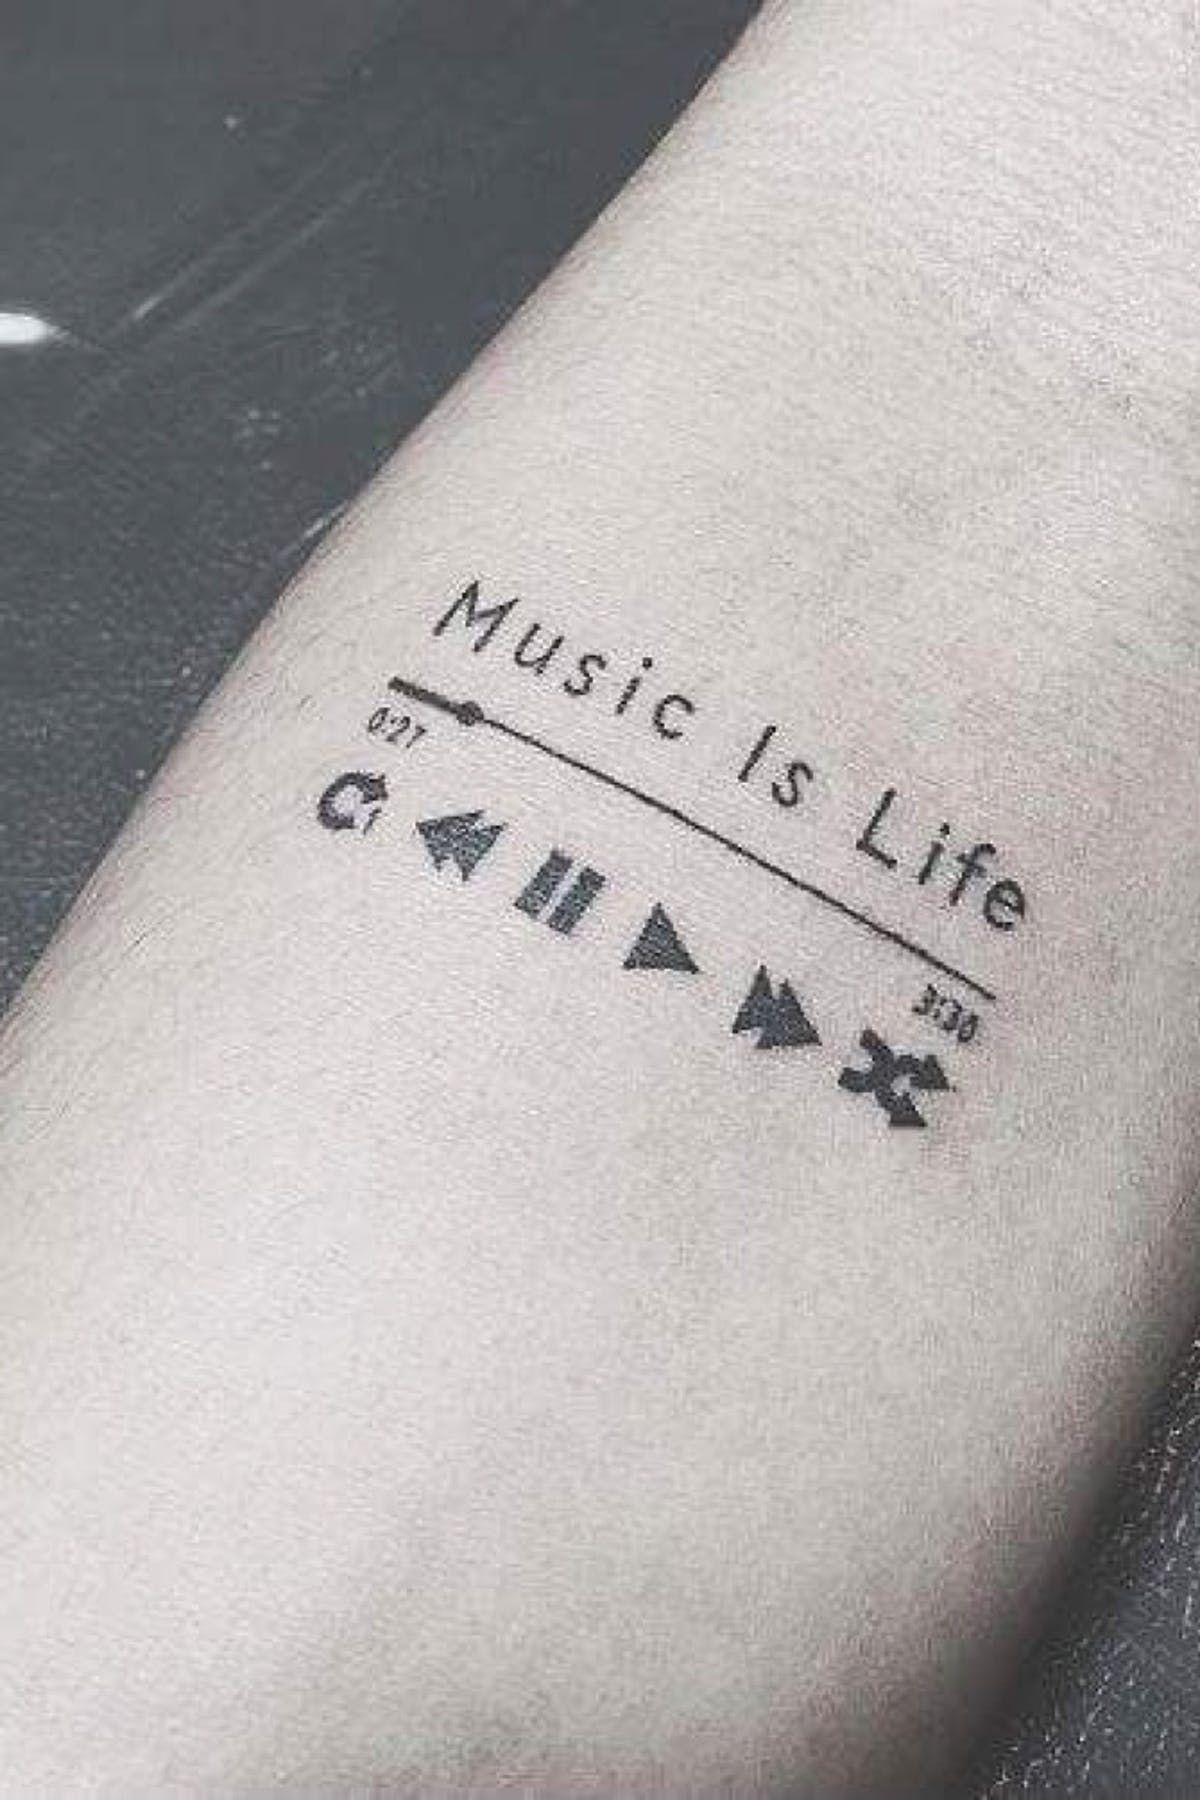 Creative Music Tattoos